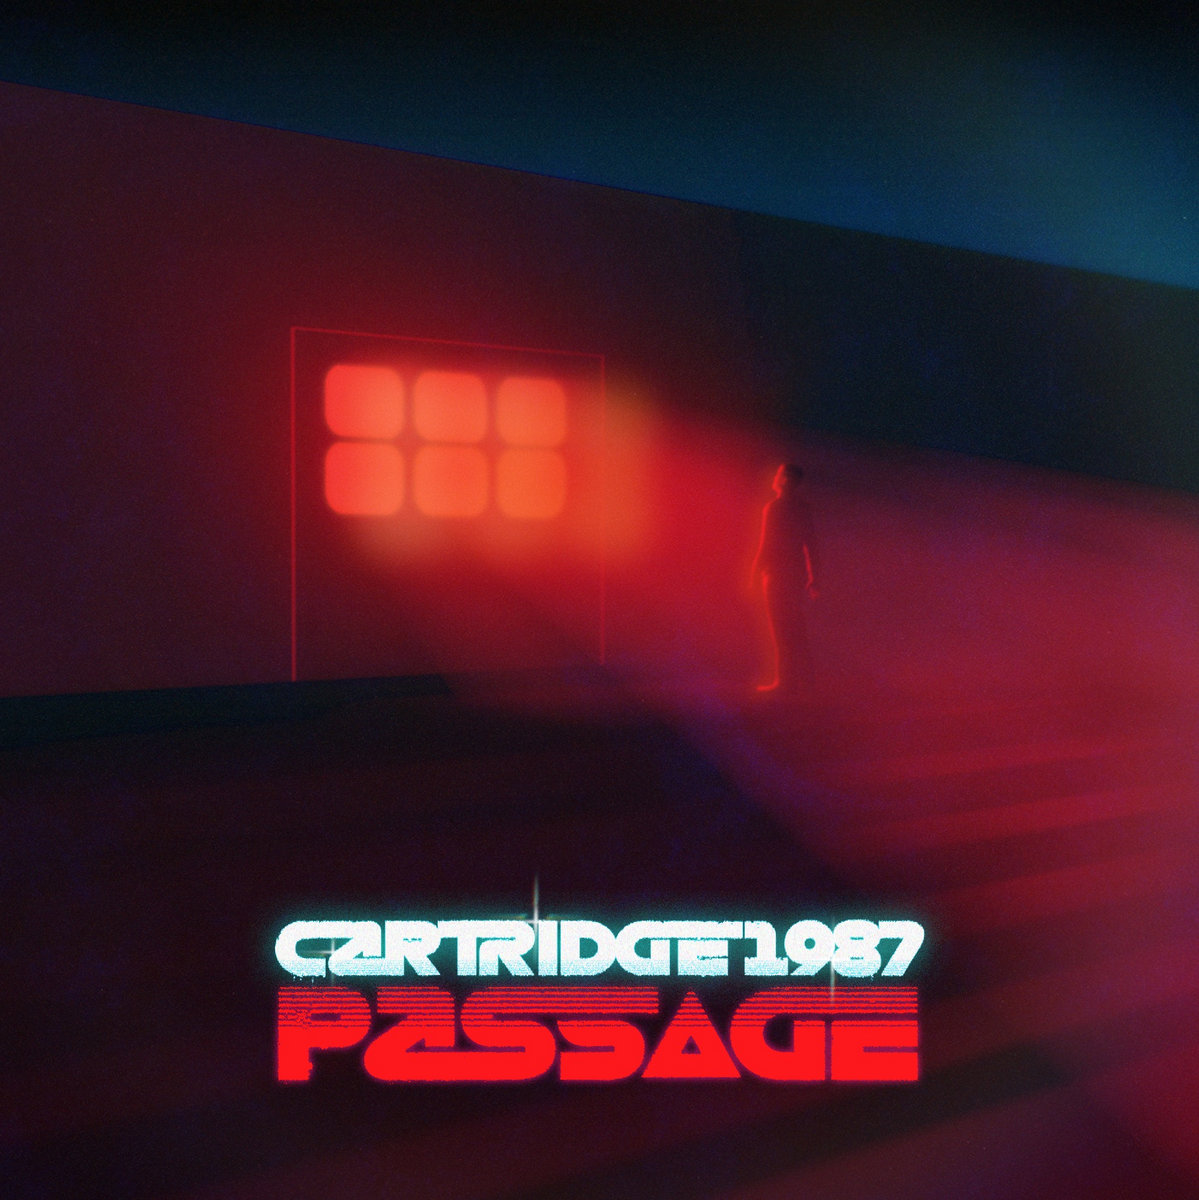 a3805284754 10 - Cartridge 1987 - Passage